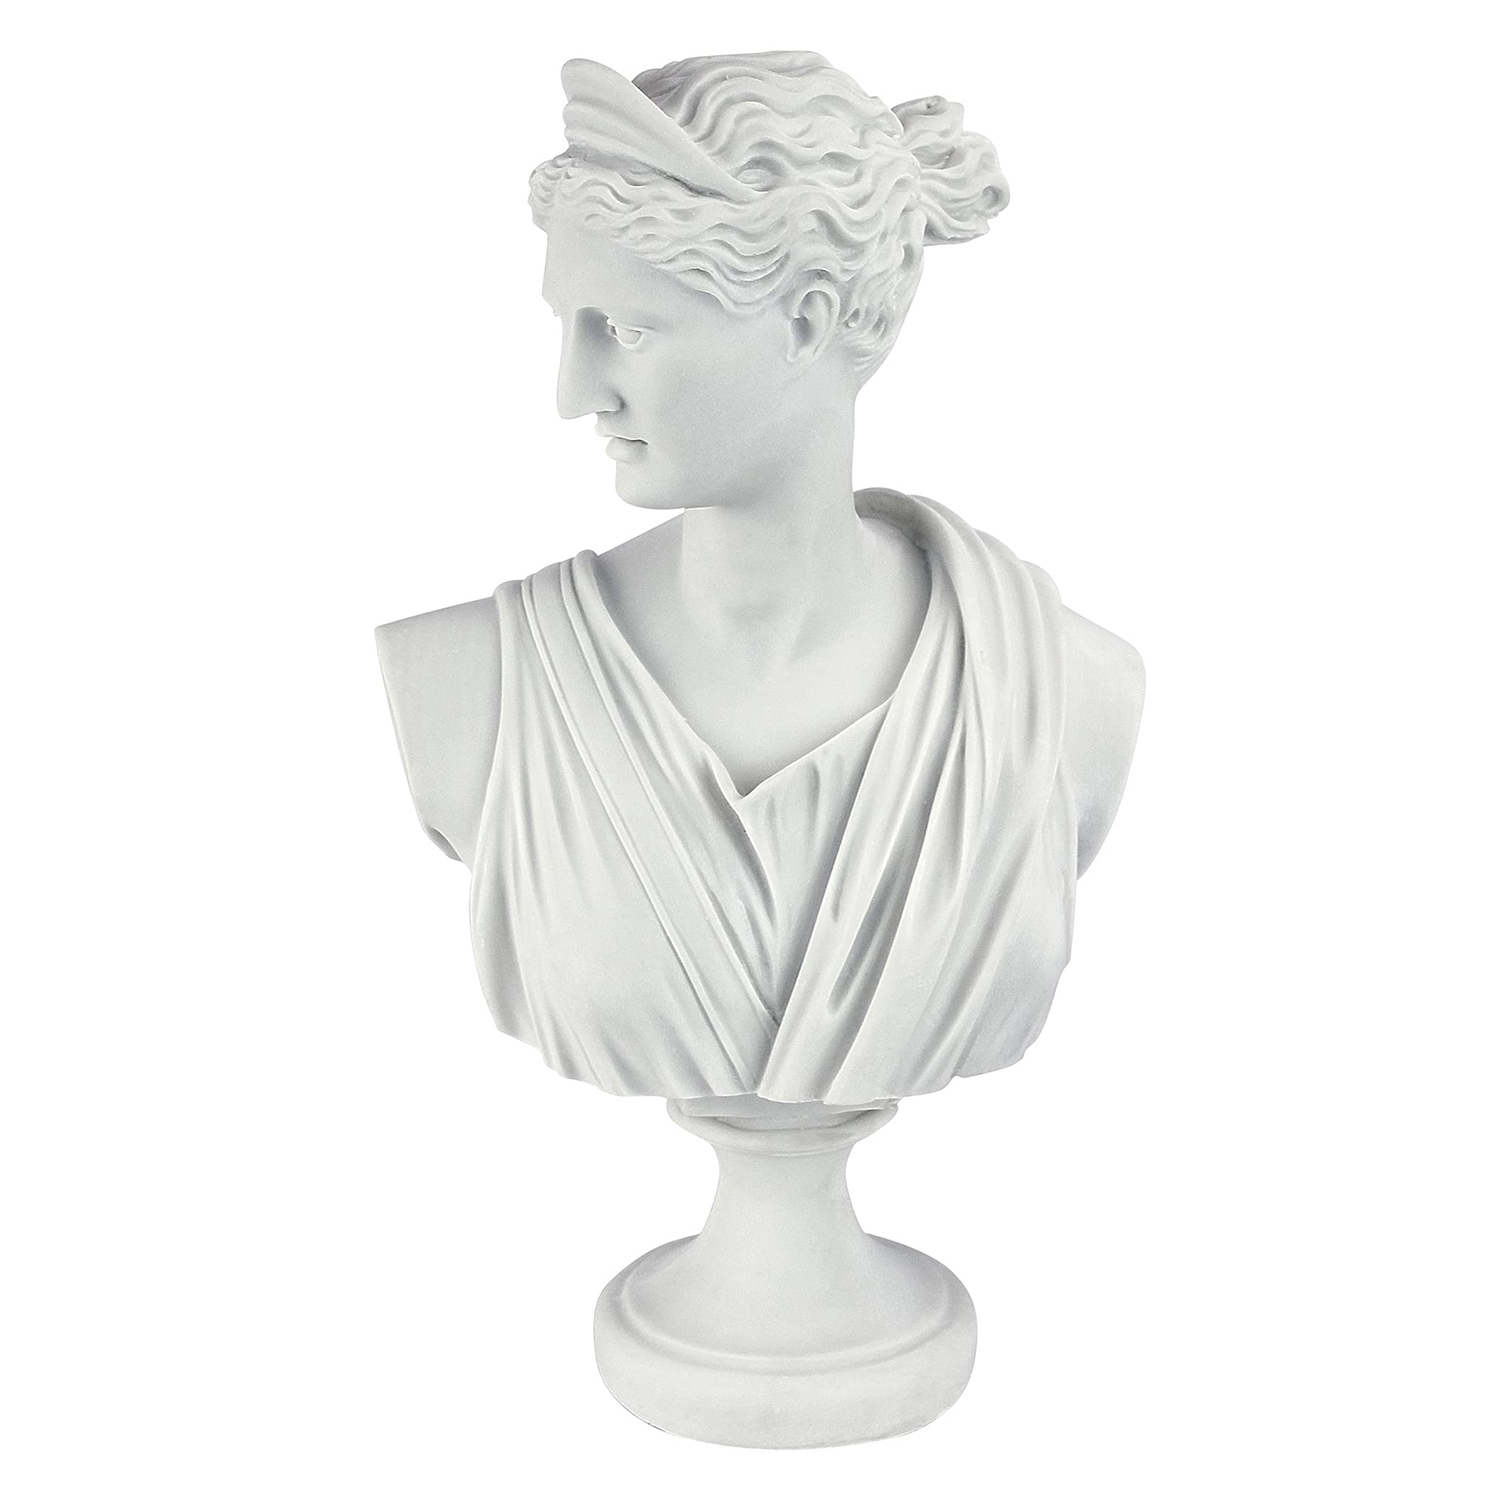 Artemis Bust Sculpture